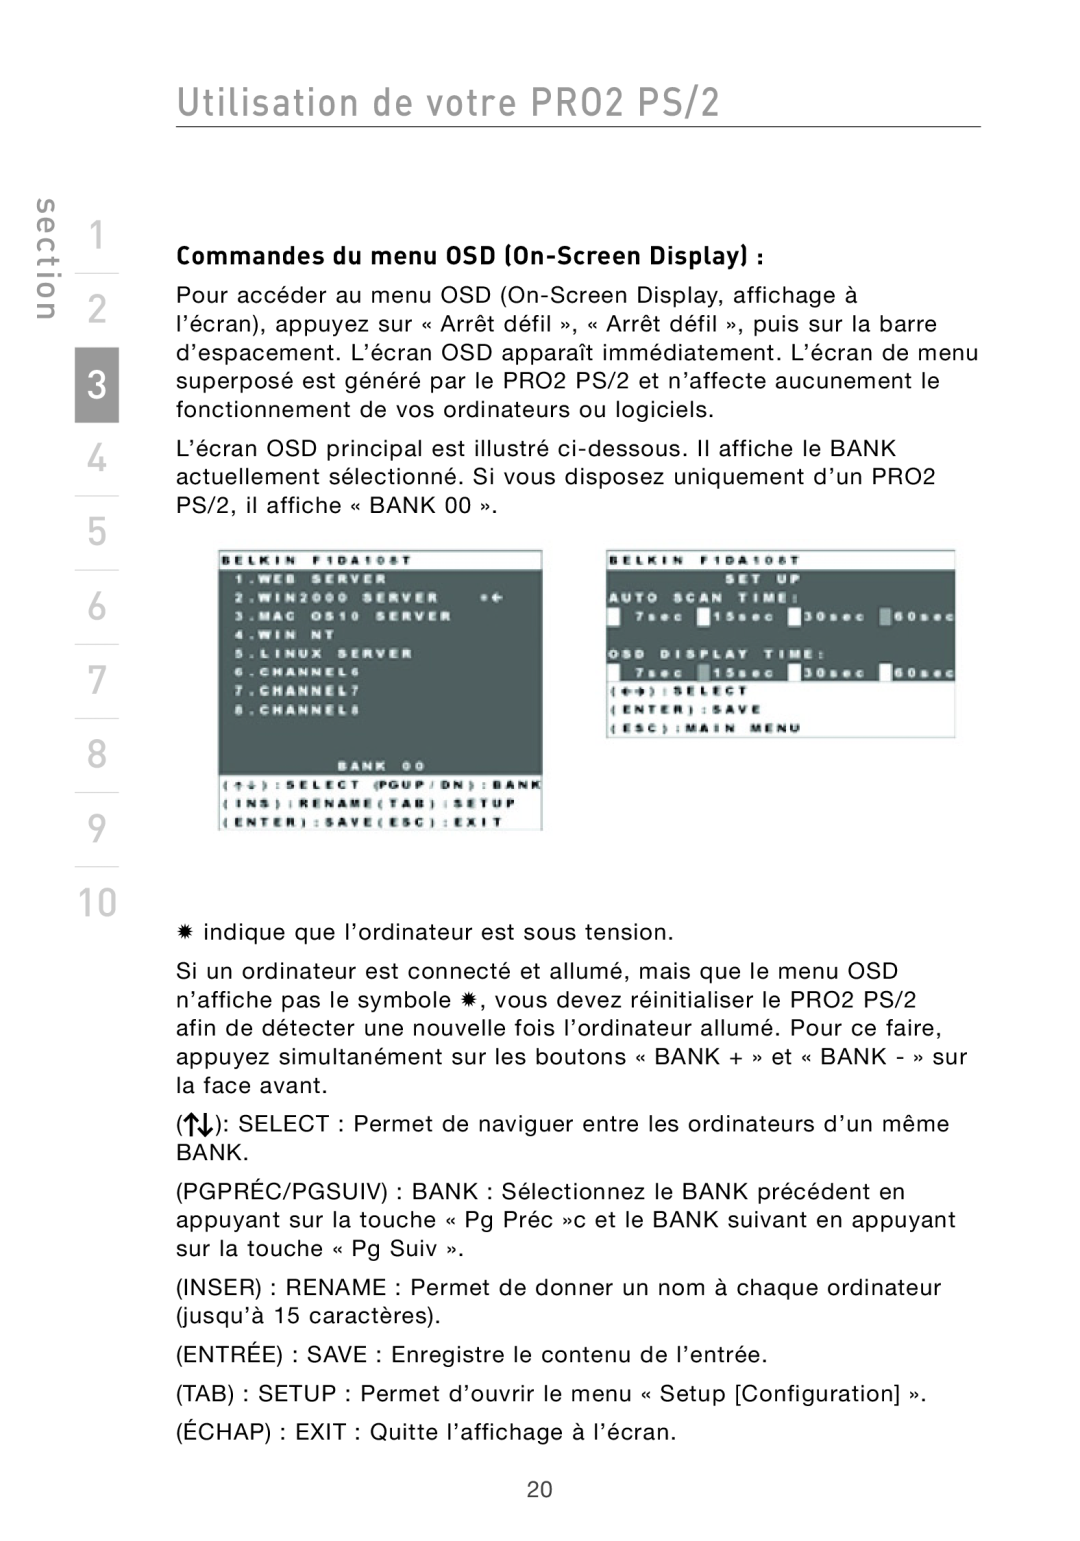 Belkin user manual Commandes du menu OSD On-Screen Display, Utilisation de votre PRO2 PS/2, section 